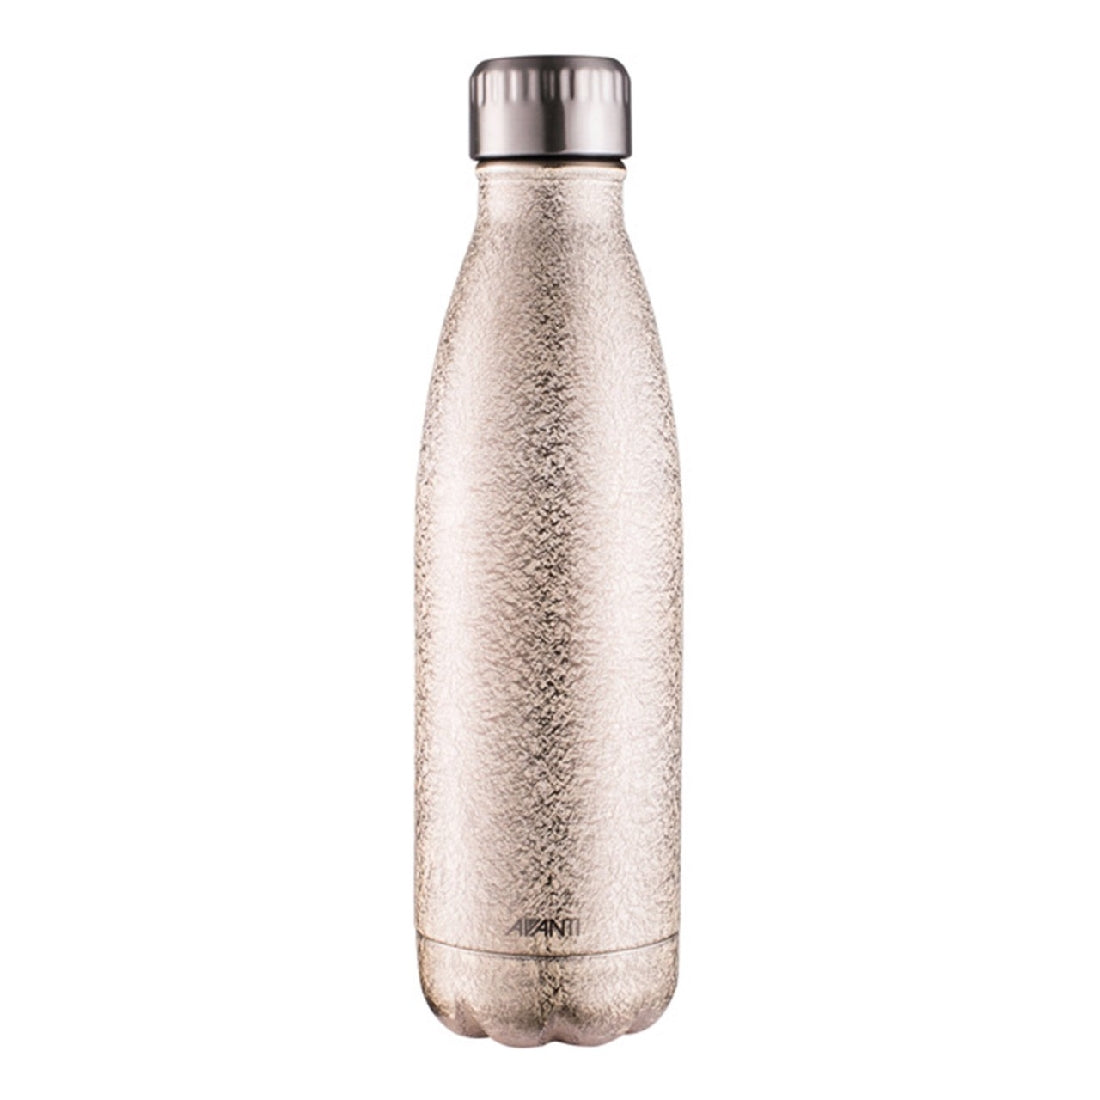 Avanti Fluid Vacuum Bottle - 500ml - Glimmer Champagne